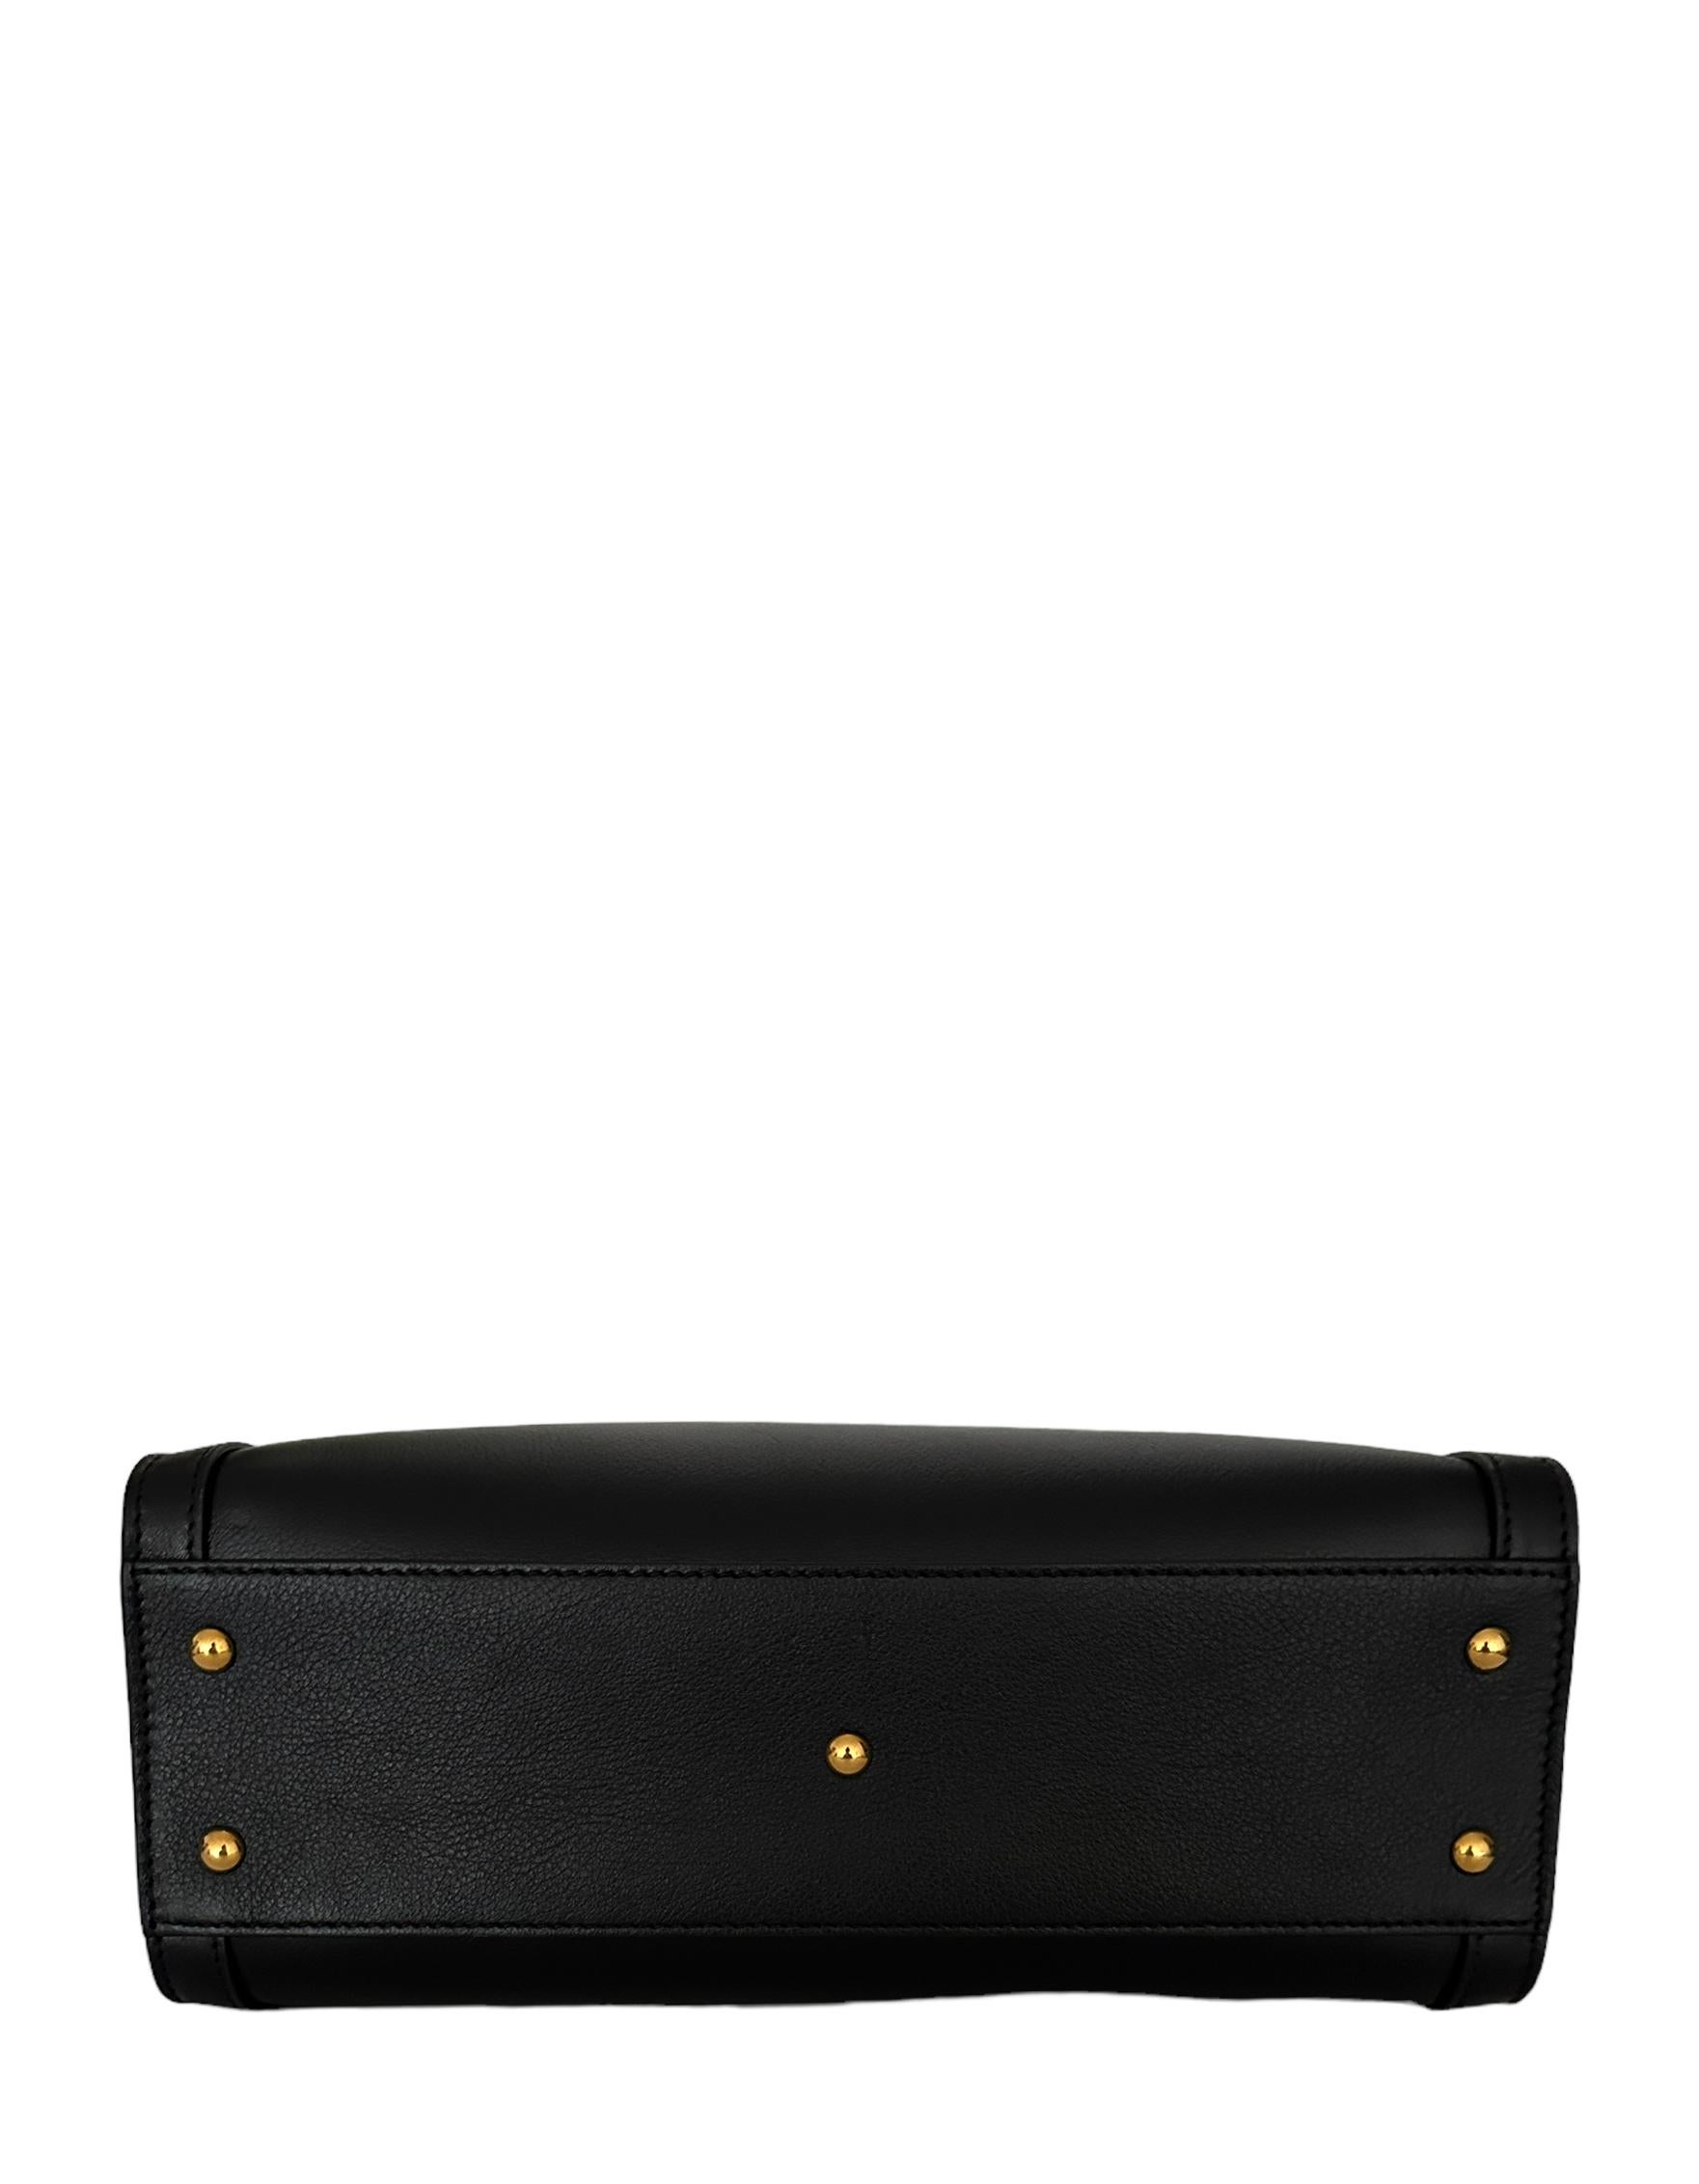 Gucci Black Small Calfskin Leather Diana Bamboo Bag w/ Crossbody Strap 1